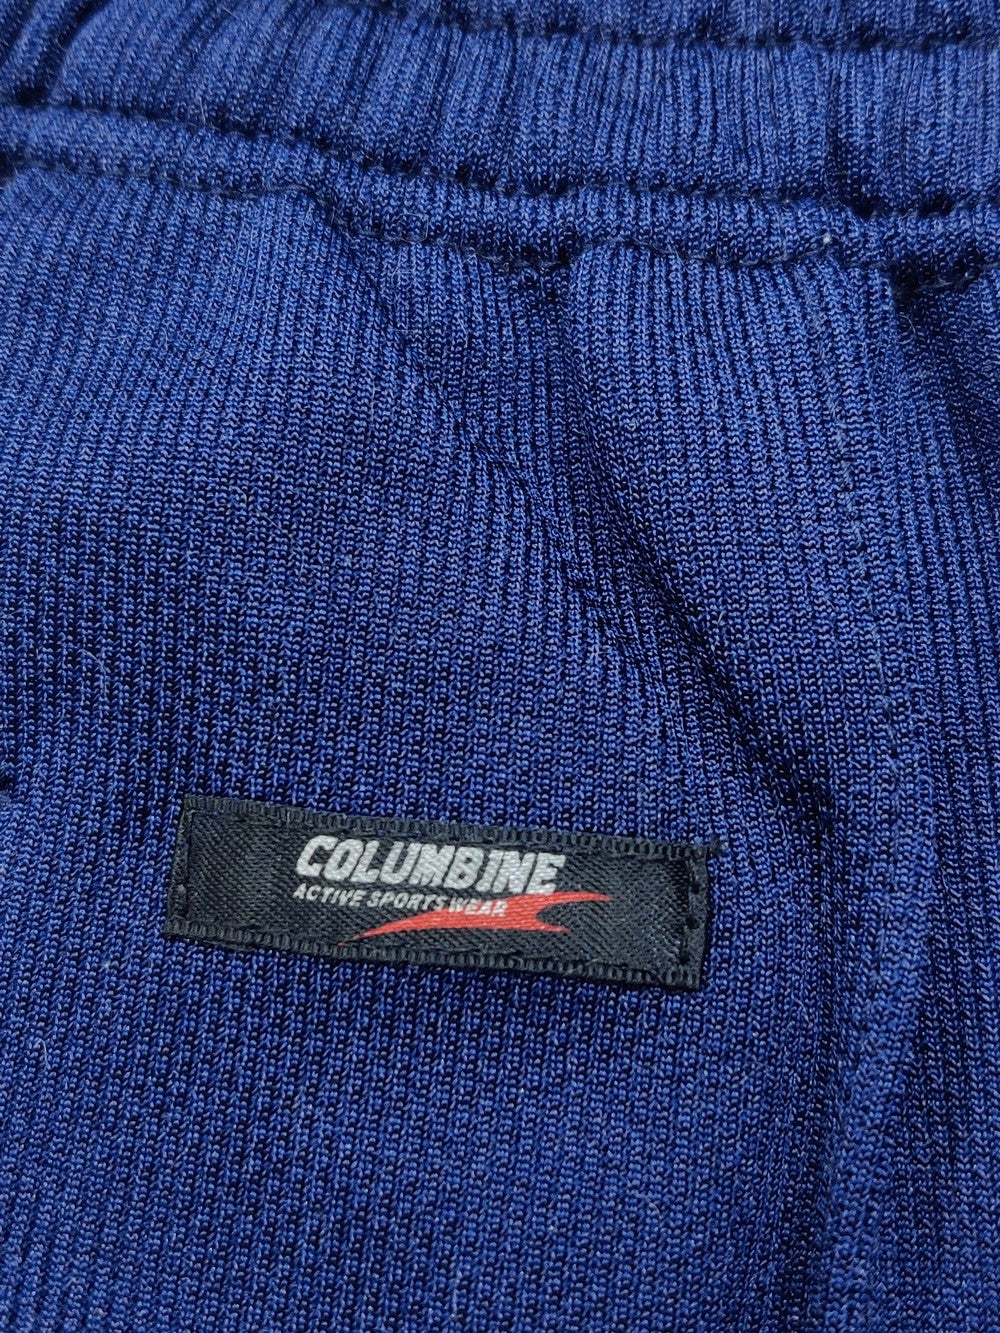 Columbine Branded Original Polyester For Men Tracksuits